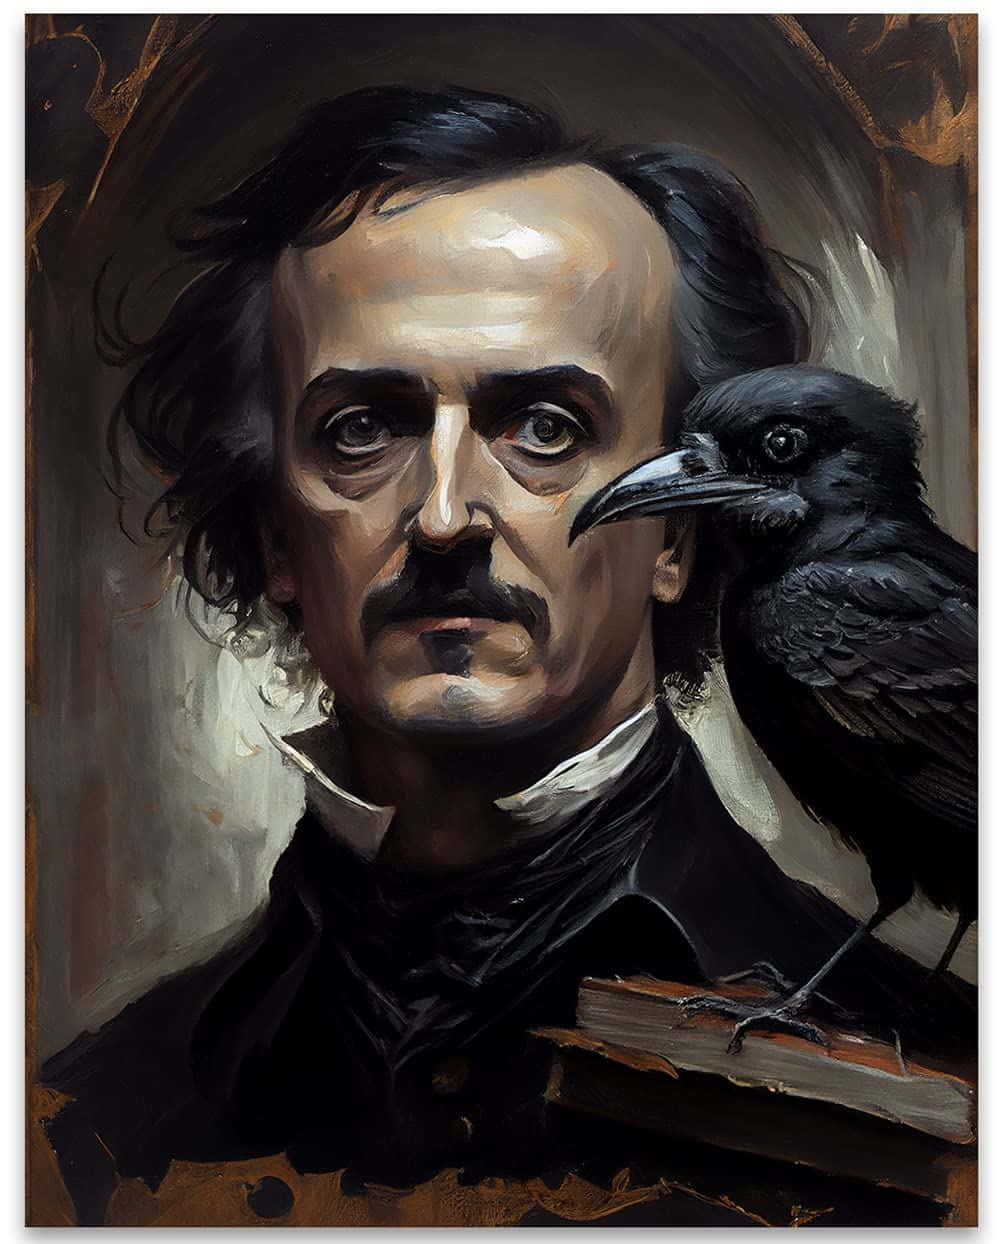 Edgar Allan Poeand Raven Wallpaper